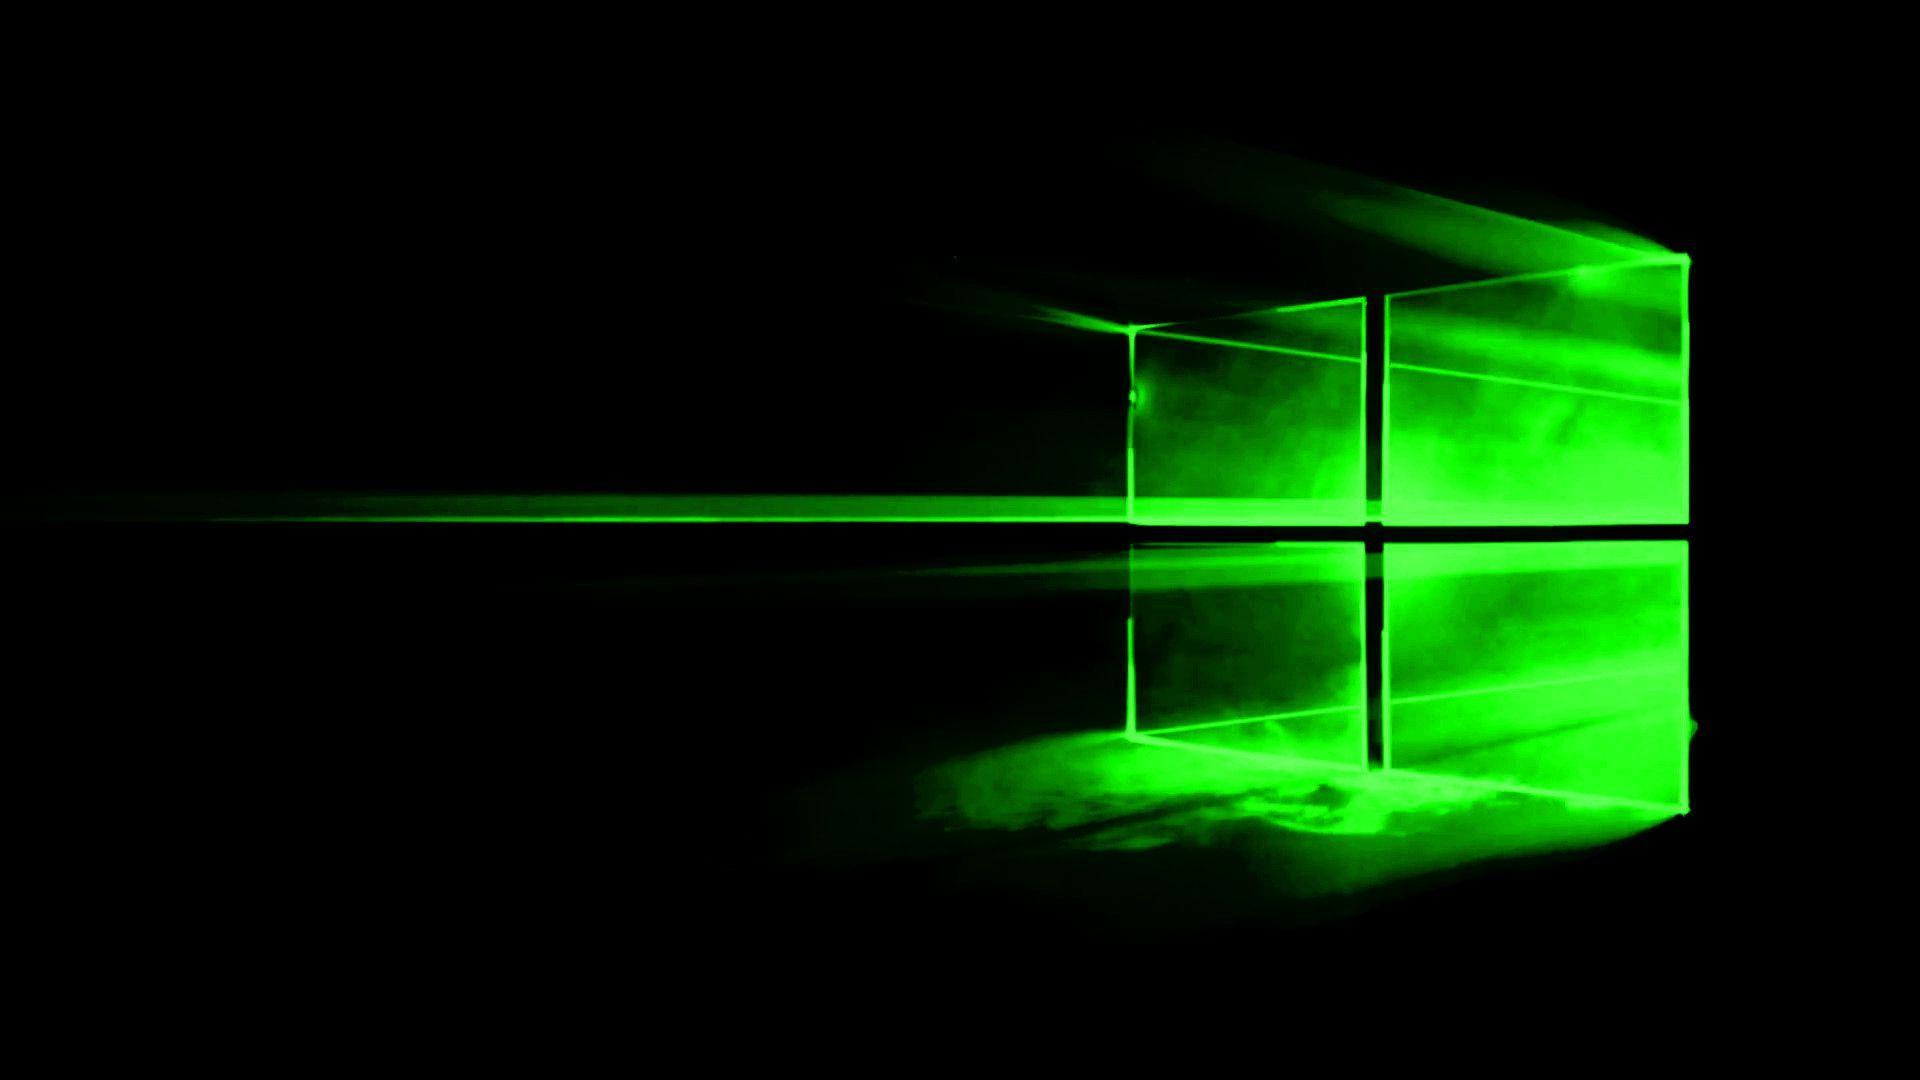 Windows 10 text logo on the green hills wallpaper - Computer wallpapers -  #46175